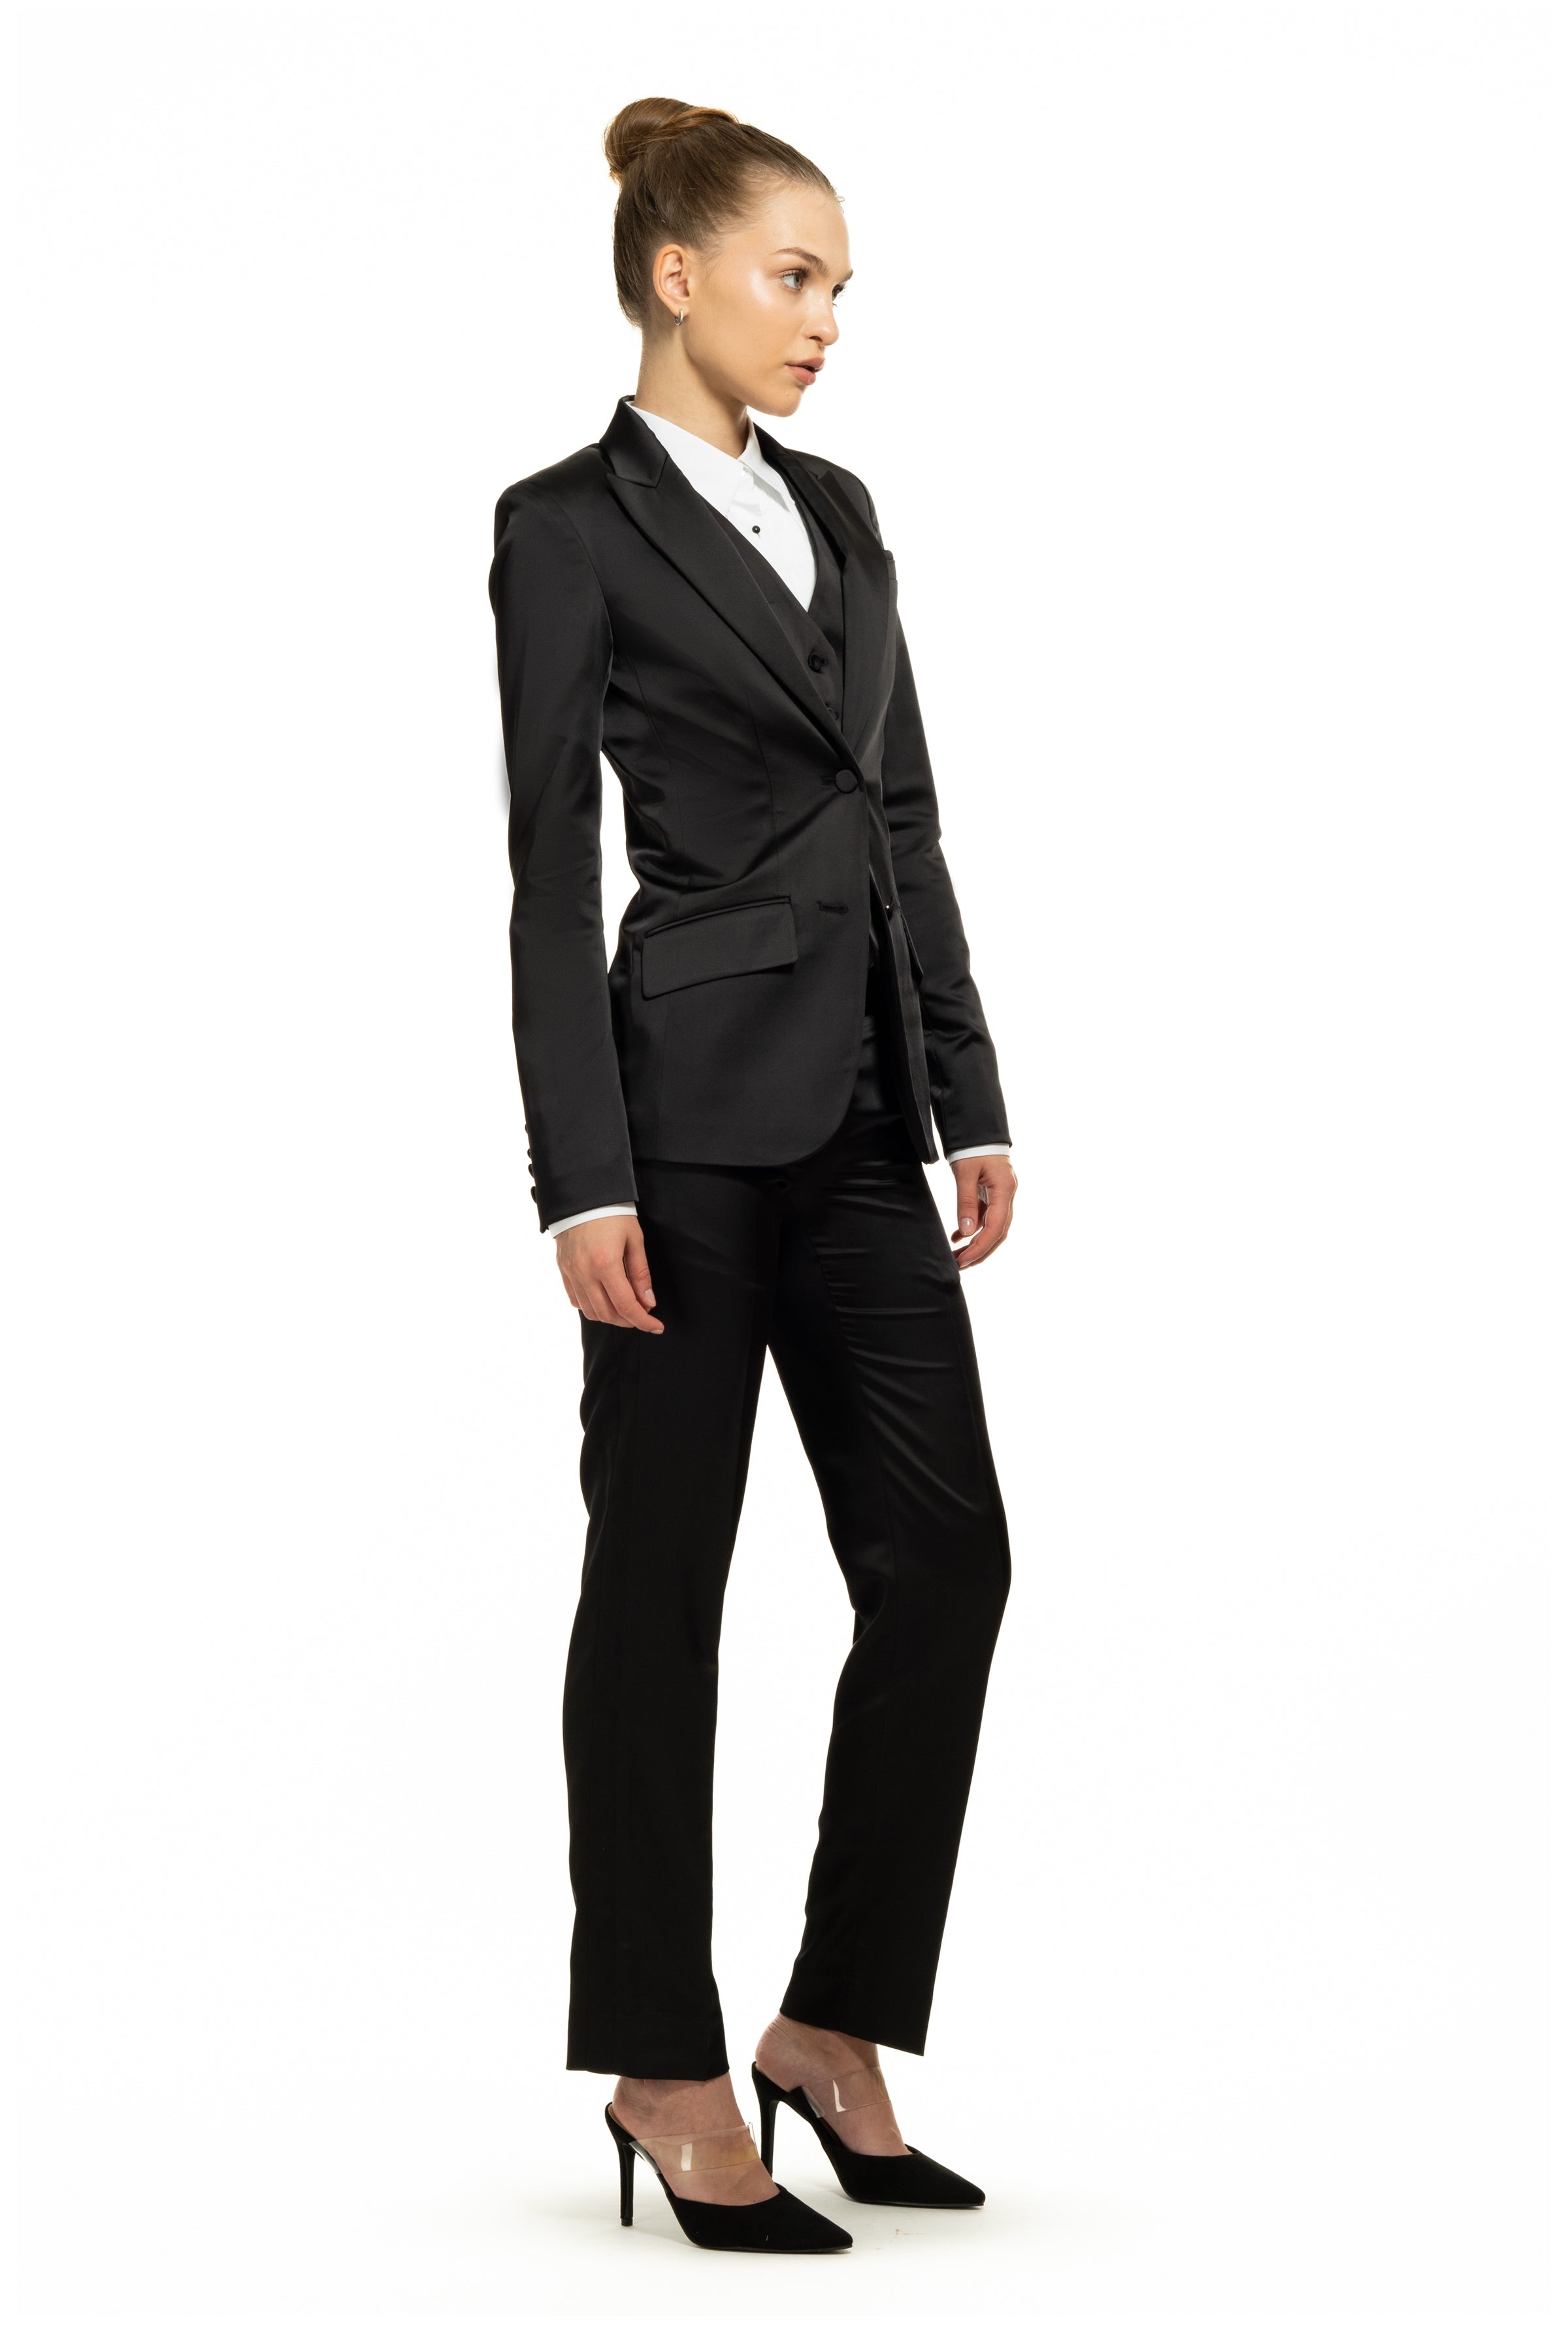 Champagne Gold Satin Slim Fit Tuxedo Pants for Women – LITTLE BLACK TUX